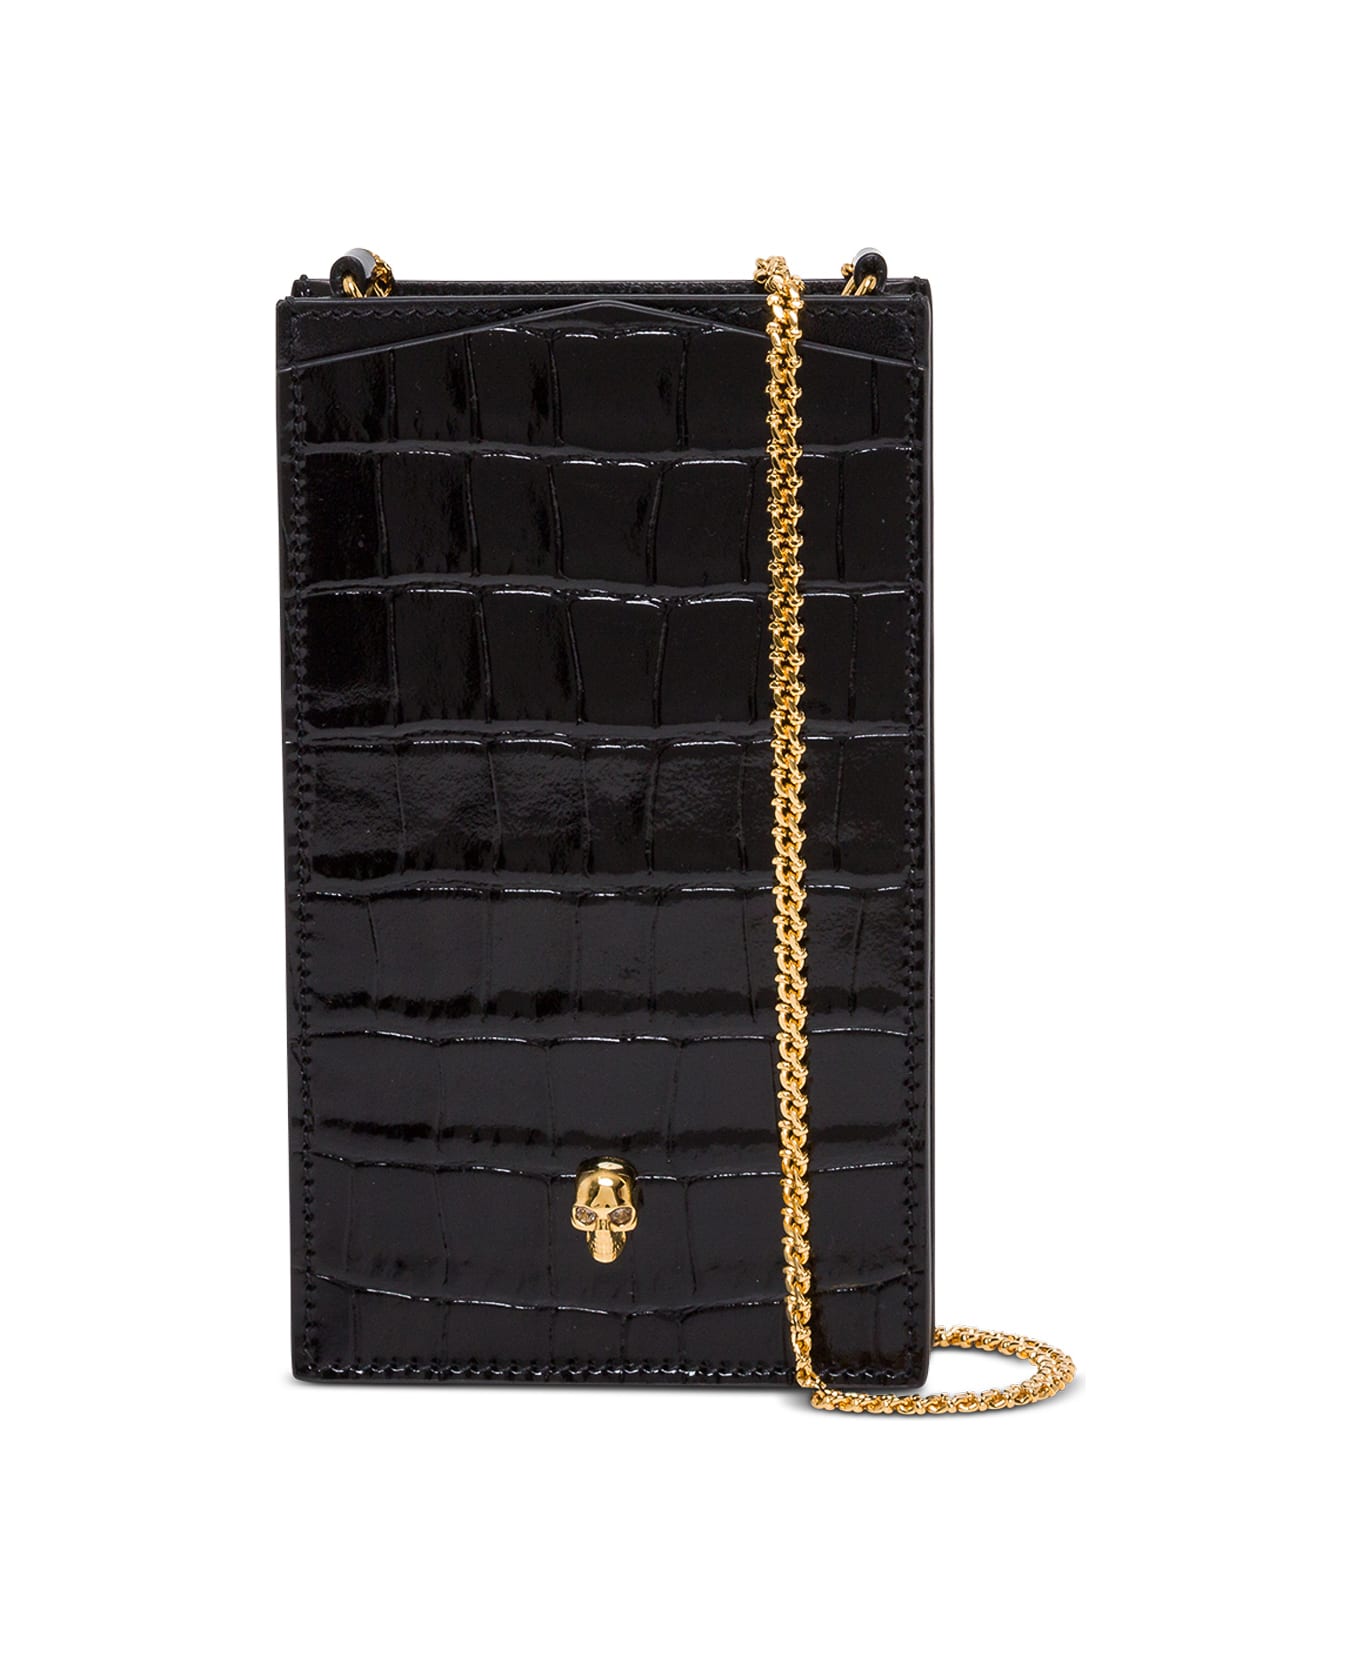 Alexander McQueen Woman's  Black Crocodile Printed Leather  Smartphone Crossbody Bag - Black